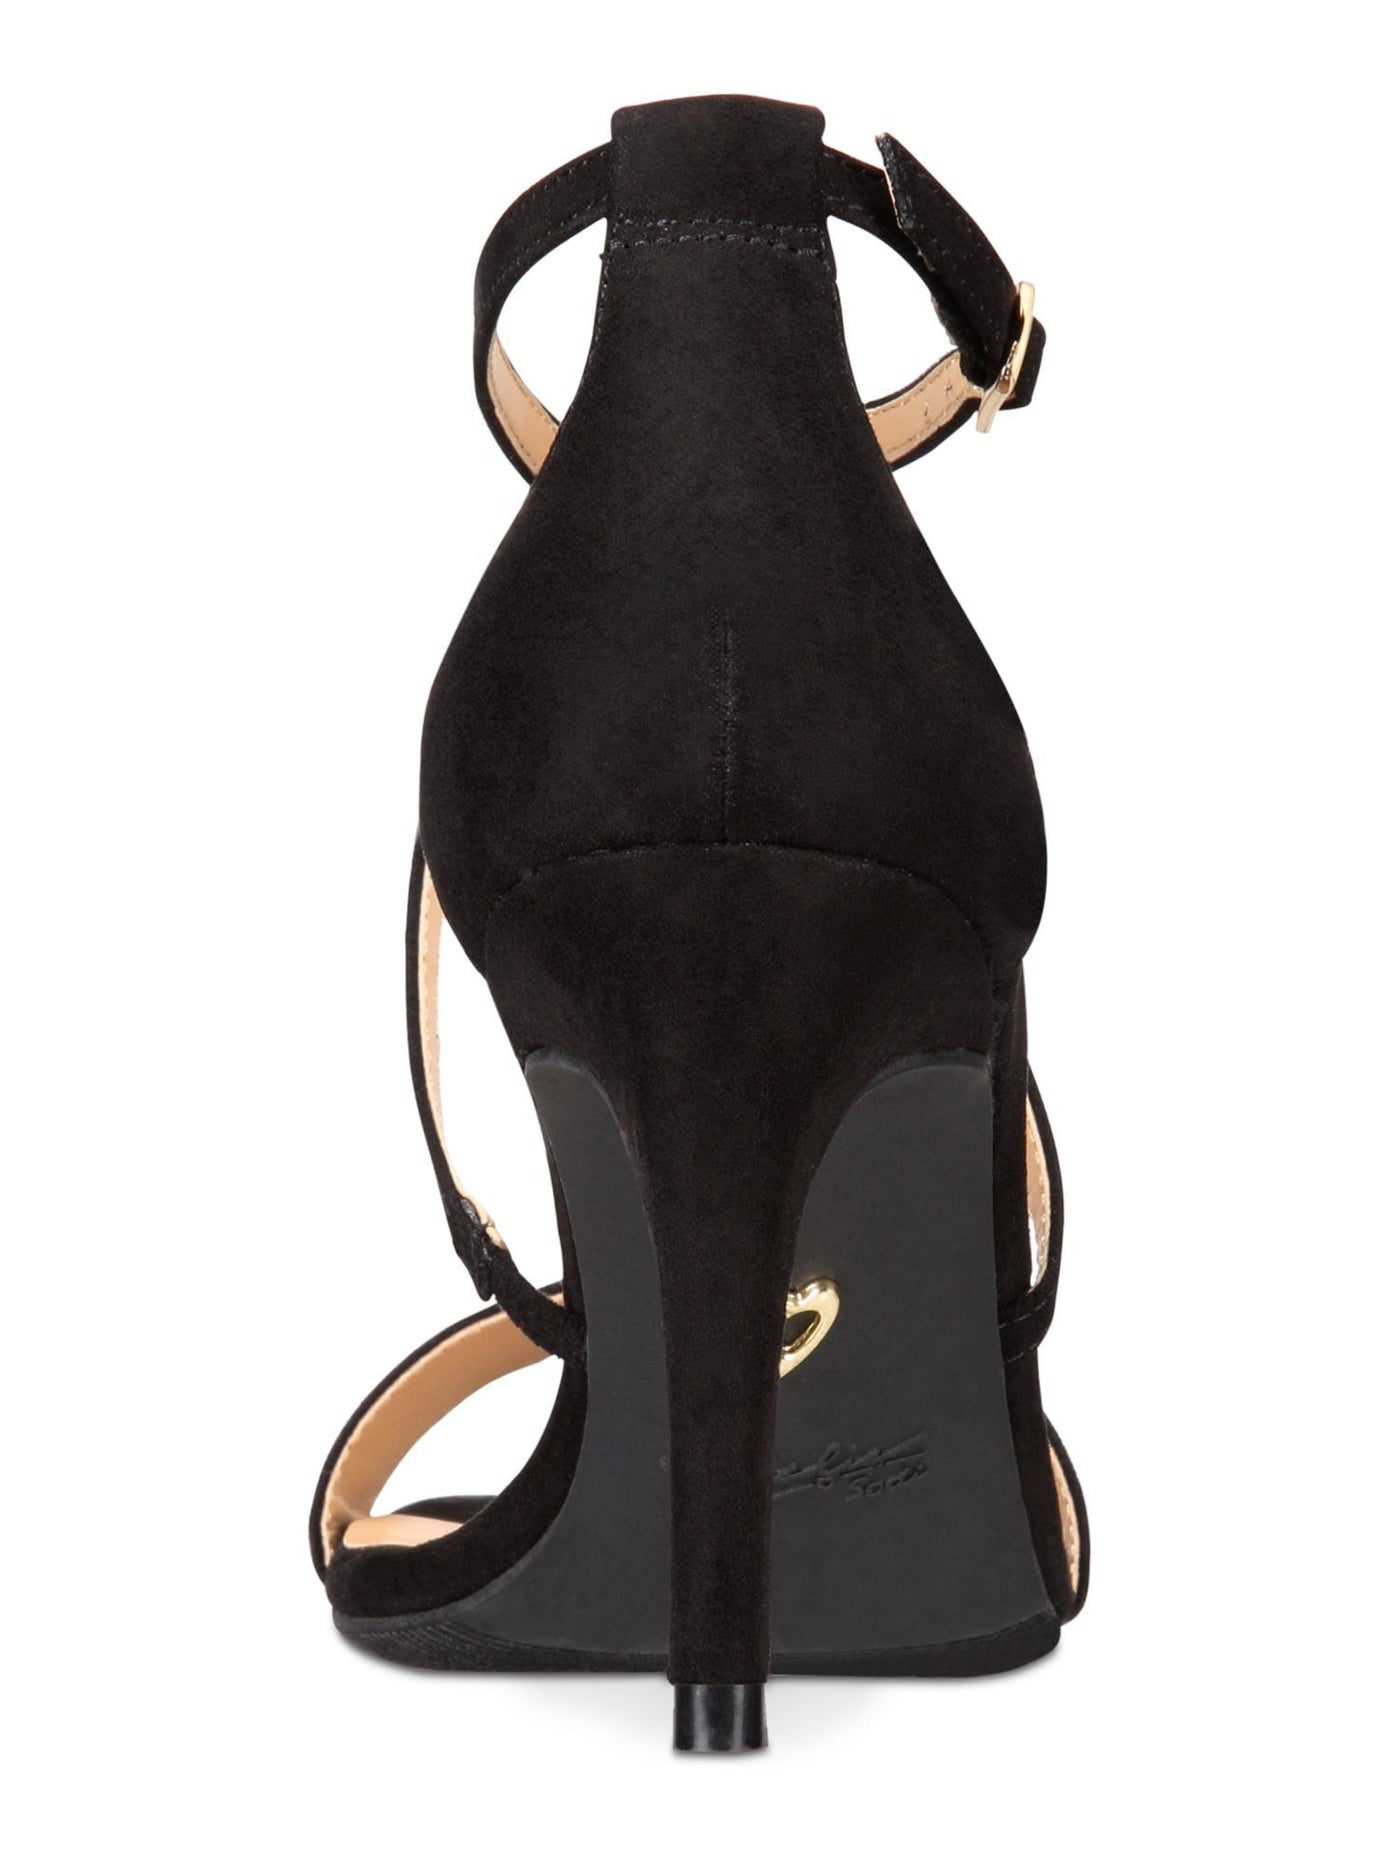 THALIA SODI Womens Black Strappy Padded Darria Round Toe Stiletto Buckle Dress Heeled Sandal 6.5 M